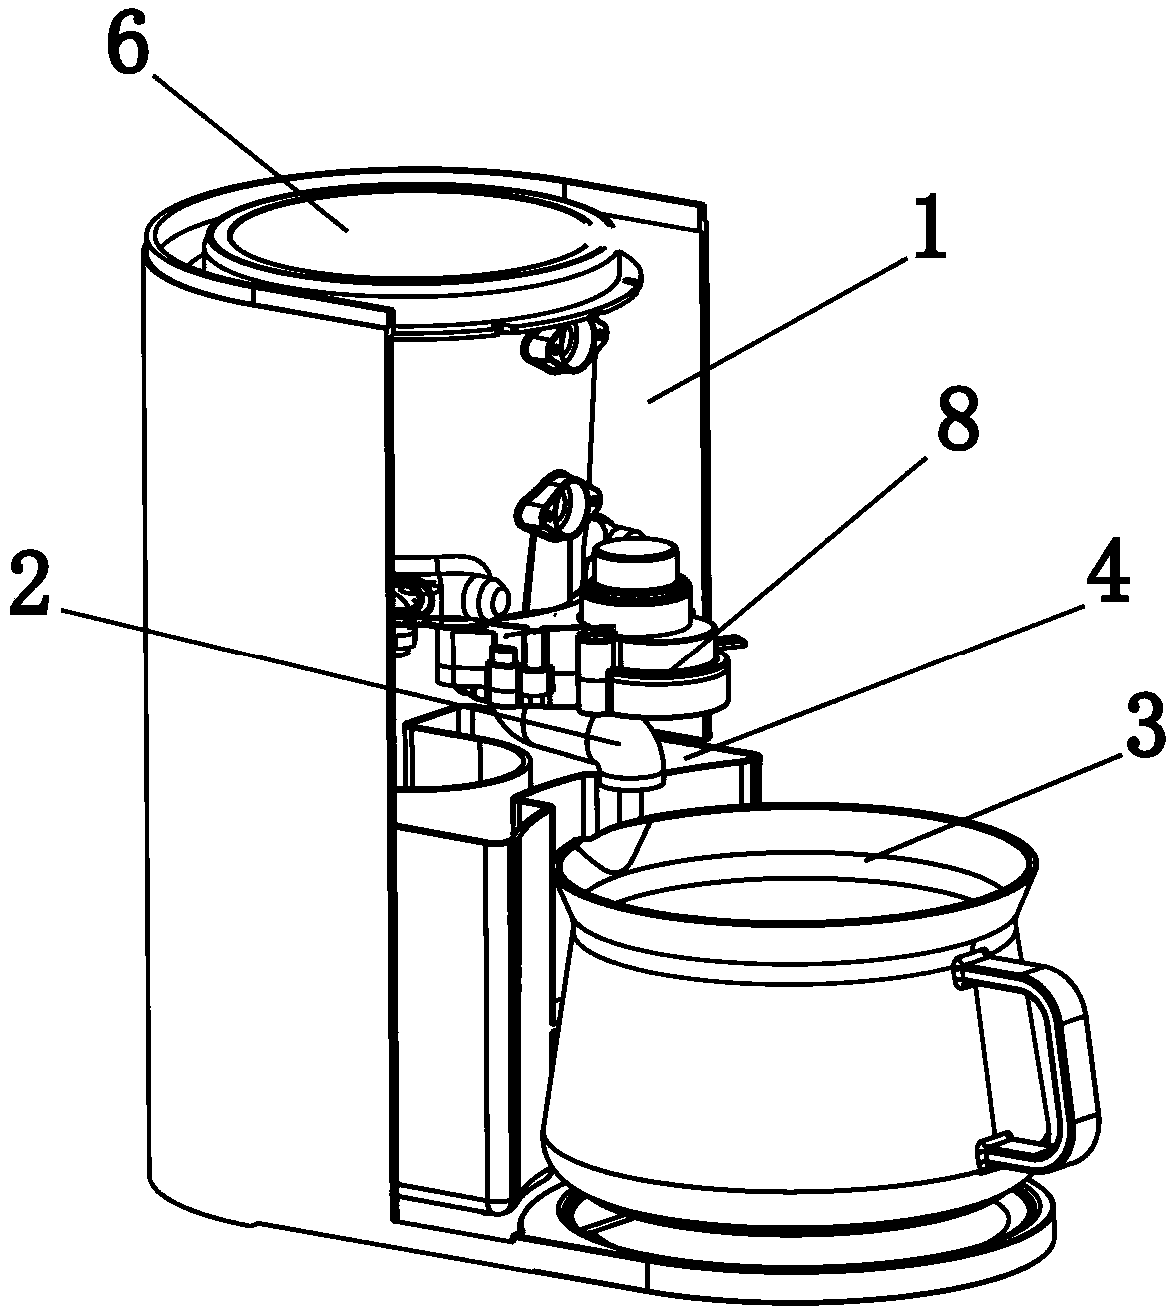 Liquid discharging method of food processing machine